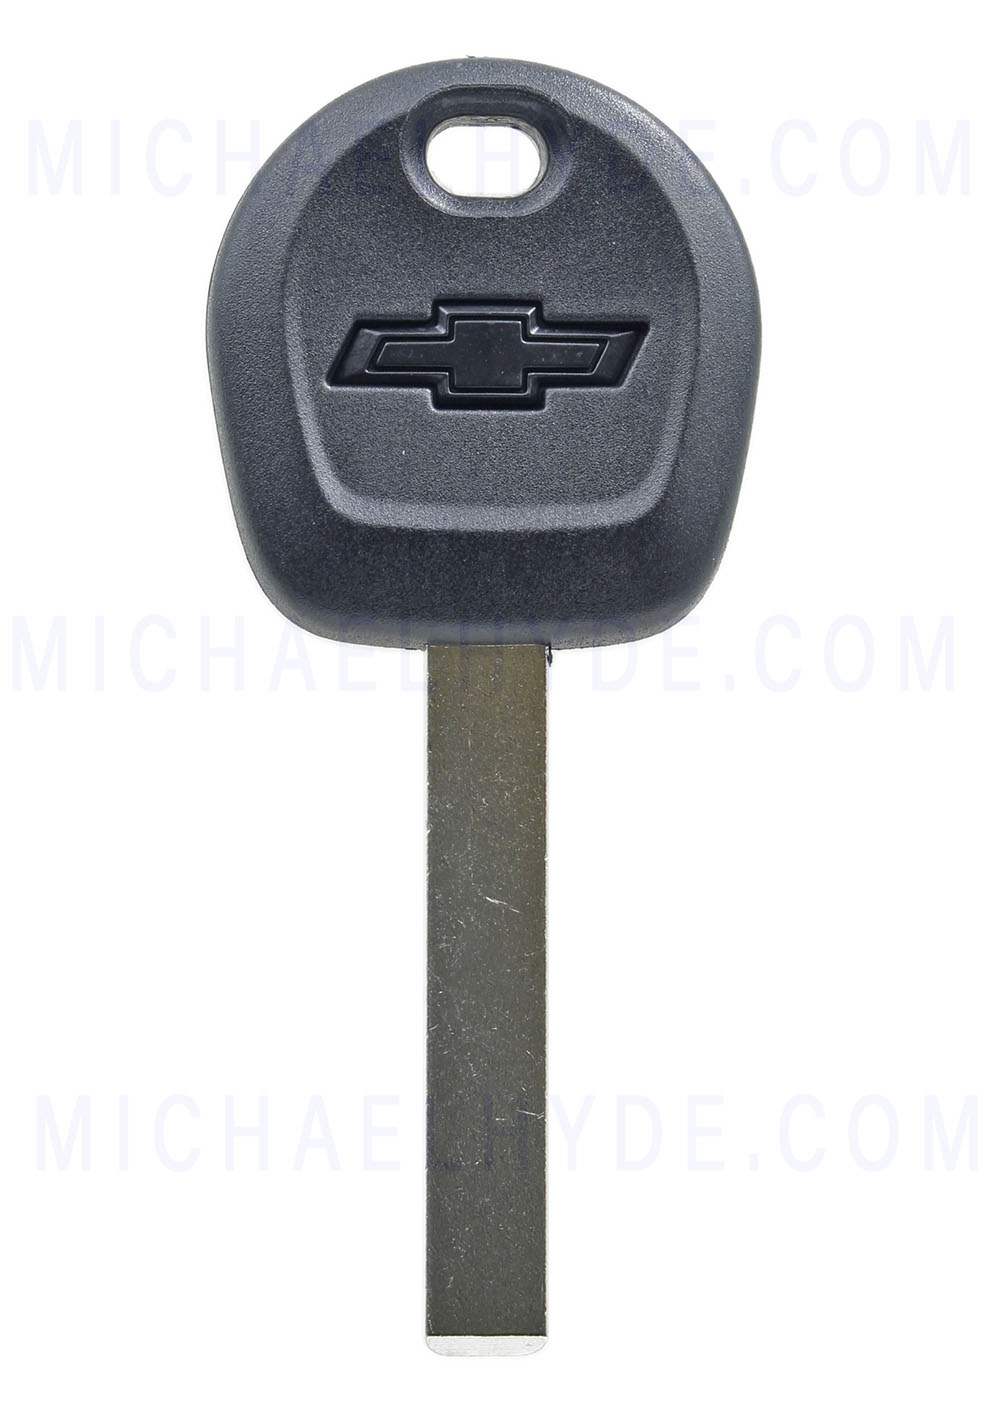 Strattec 5934957 - Chevy Logo 8 Cut High Security Key - OE# 13523903 - 2015+ Chevy Colorado - Oval Head